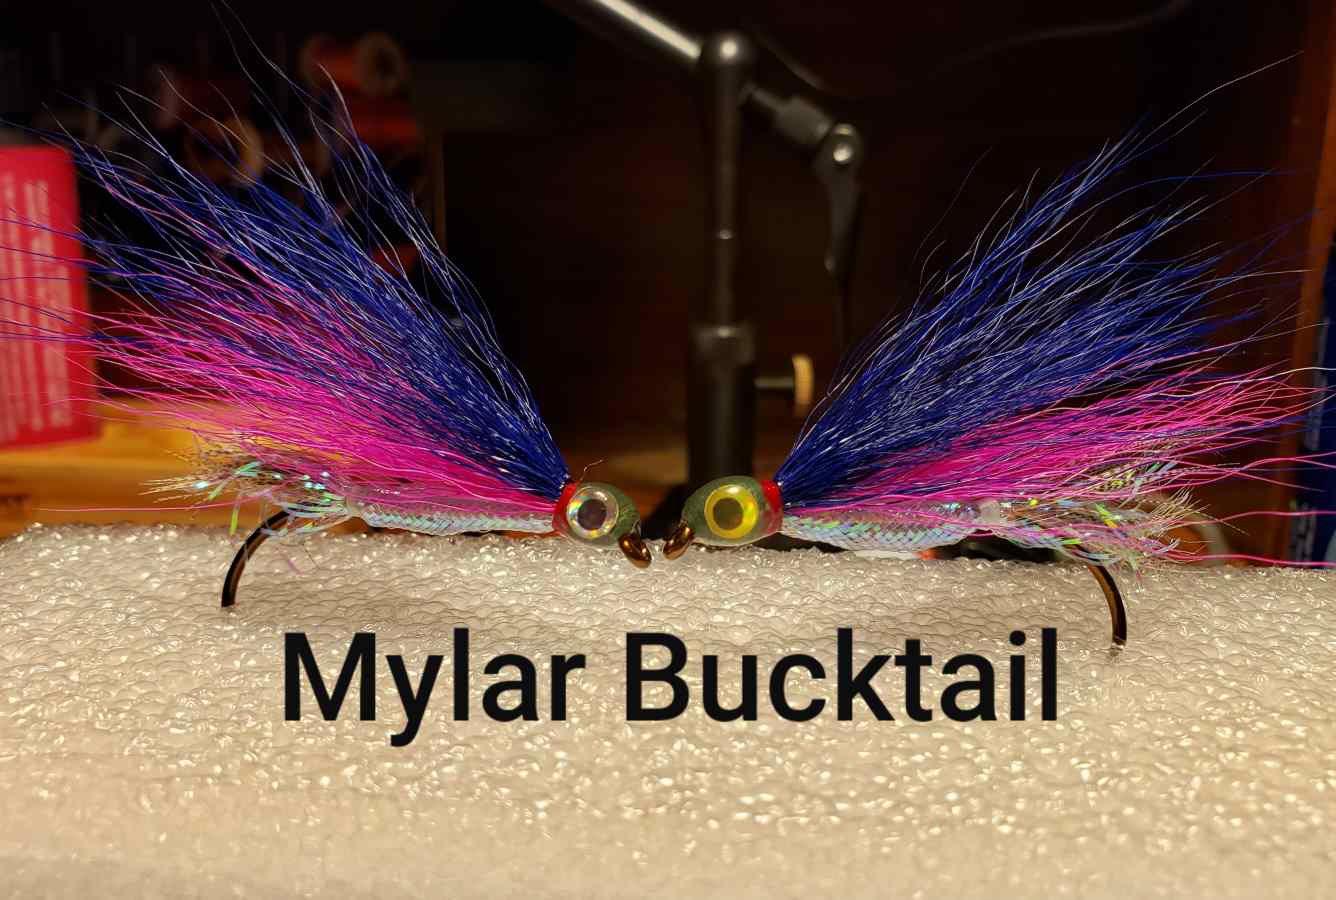 https://fridaynightflies.com/wp-content/uploads/2020/04/Friday-Night-Flies-Mylar-Bucktail-Fly.jpg